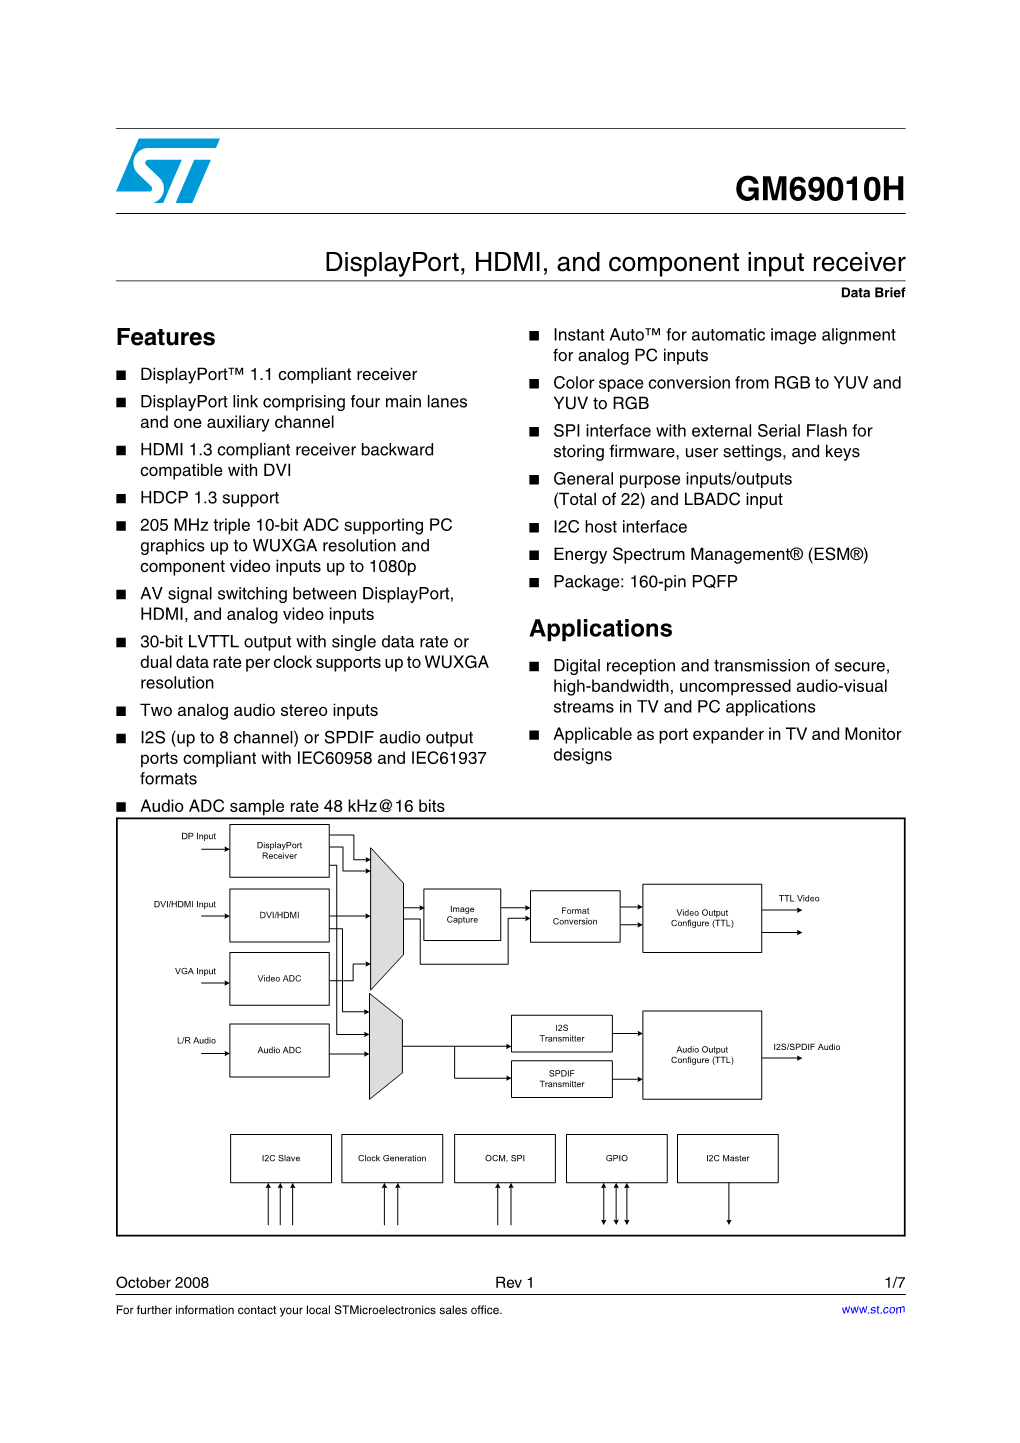 Displayport, HDMI, and Component Input Receiver Data Brief